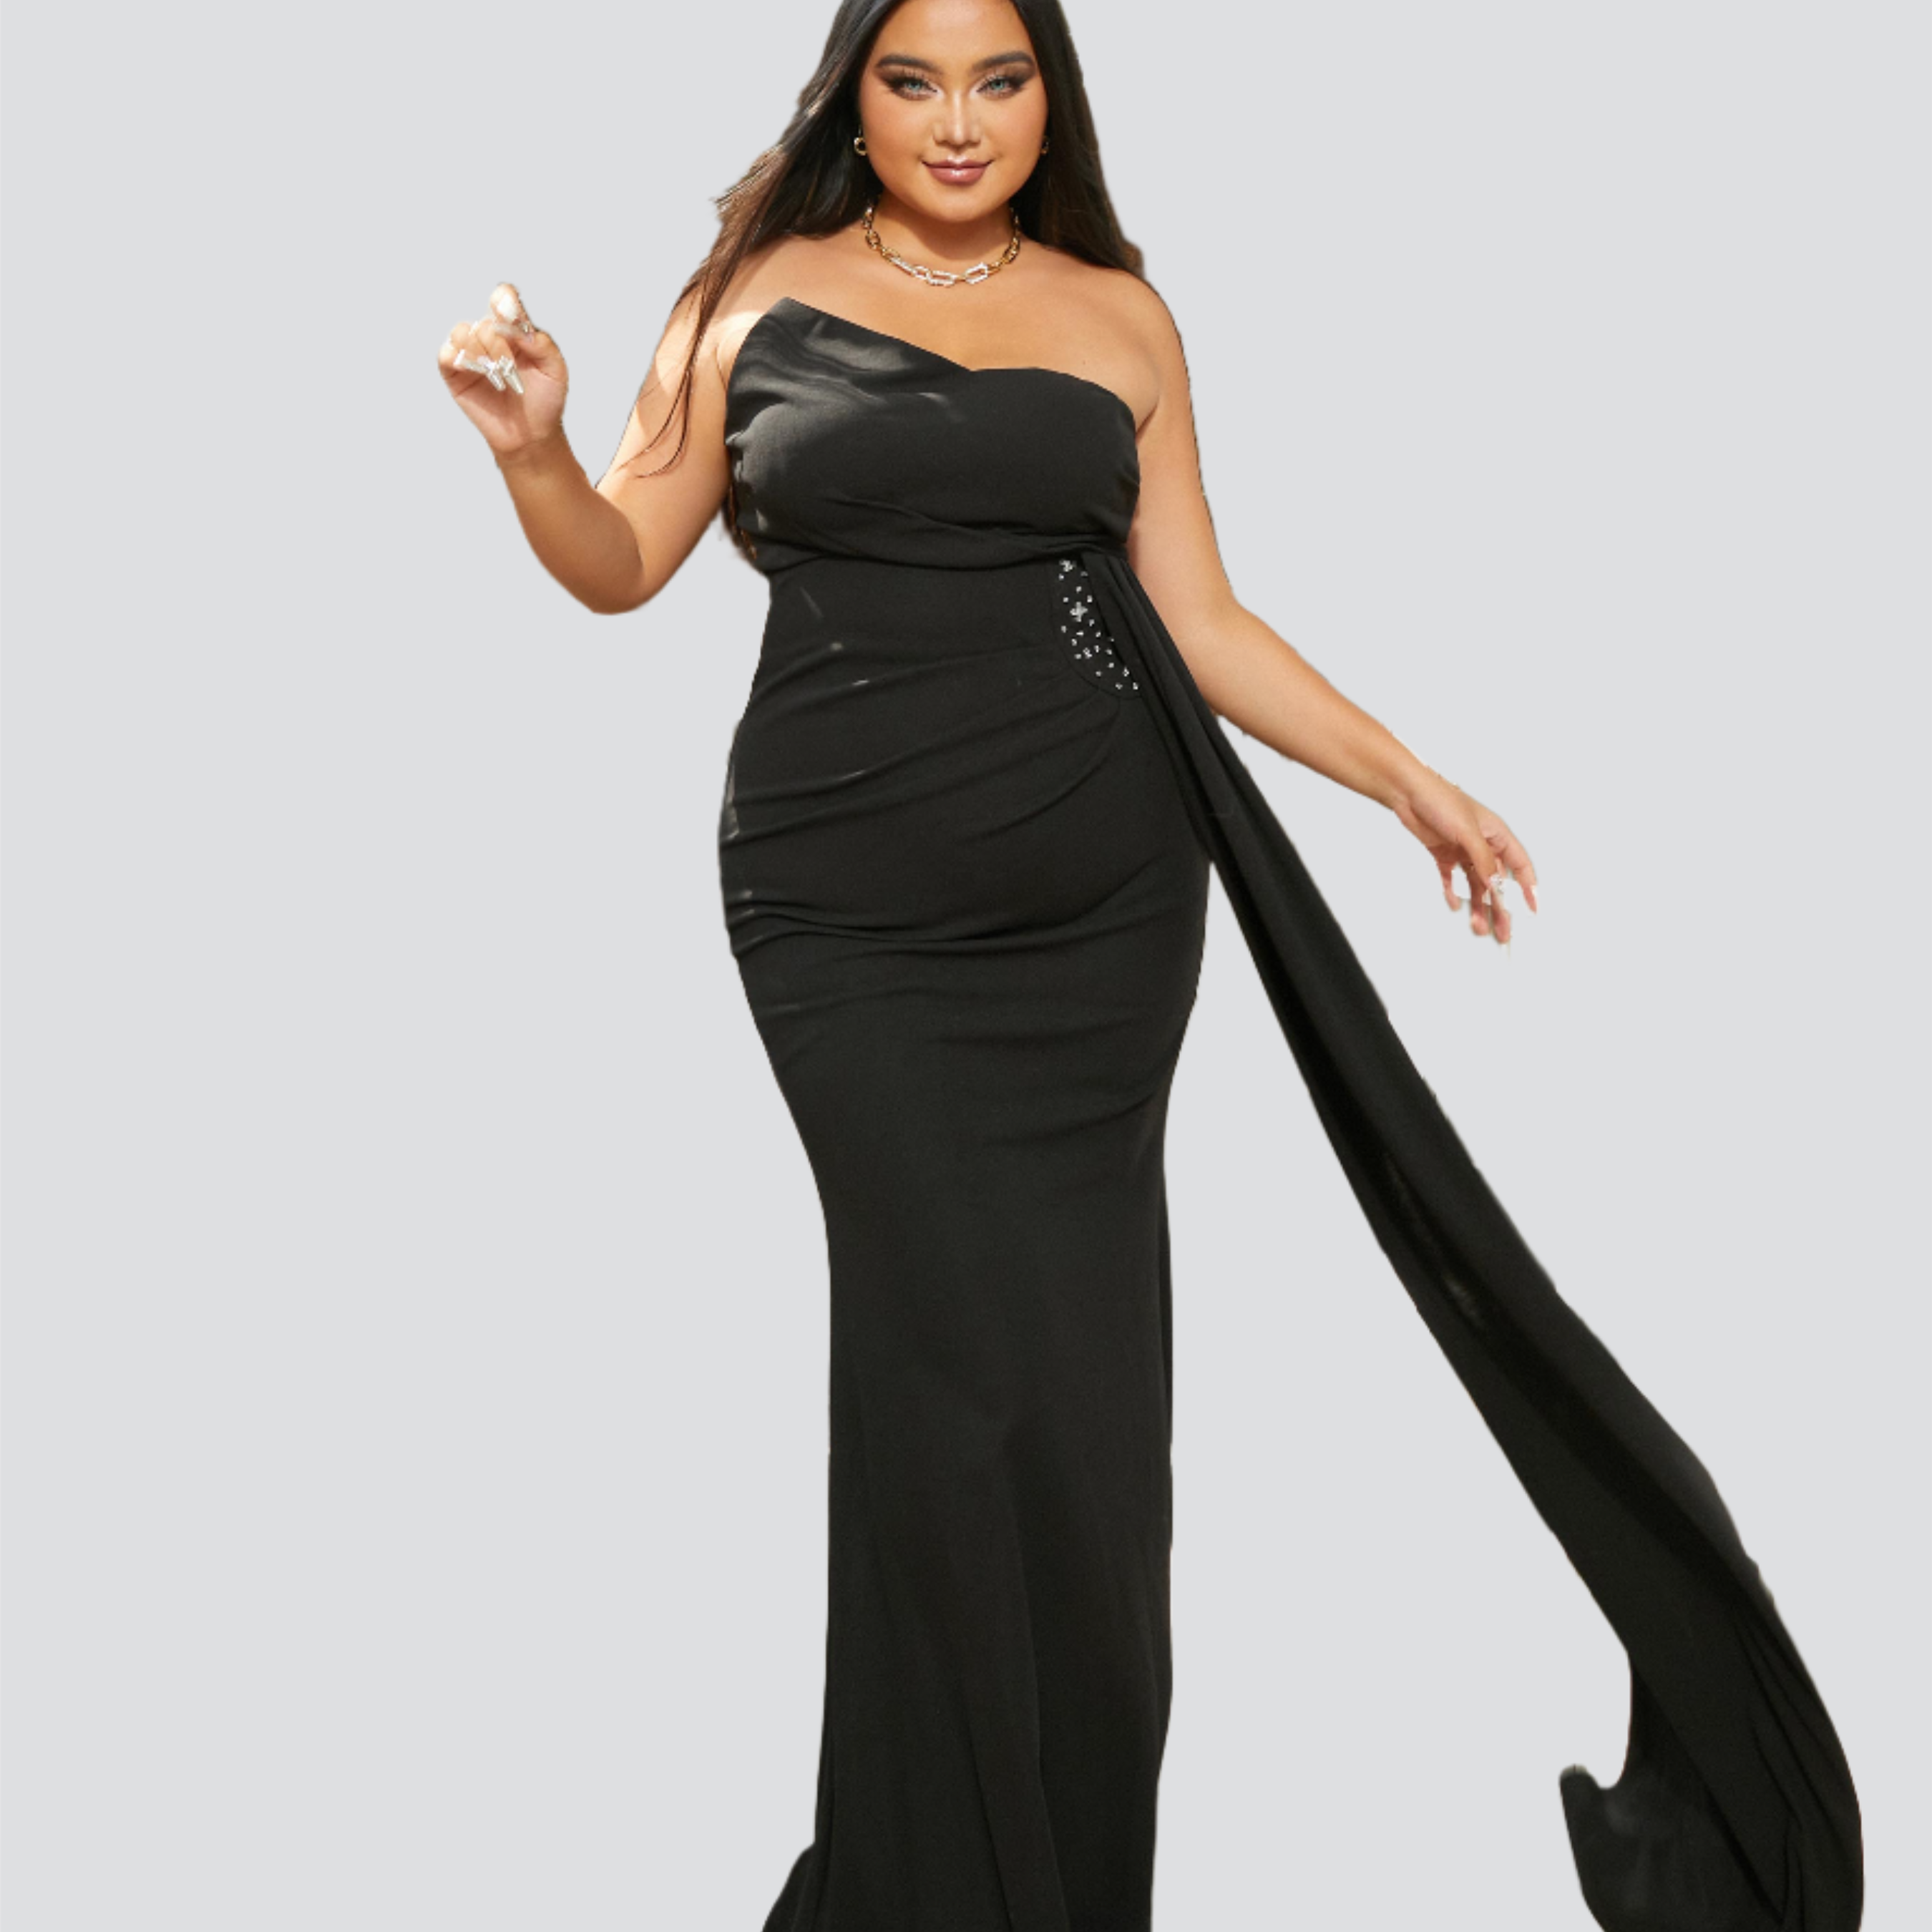 Plus Size Tube Top Sleeveless Mermaid Black Formal Dress